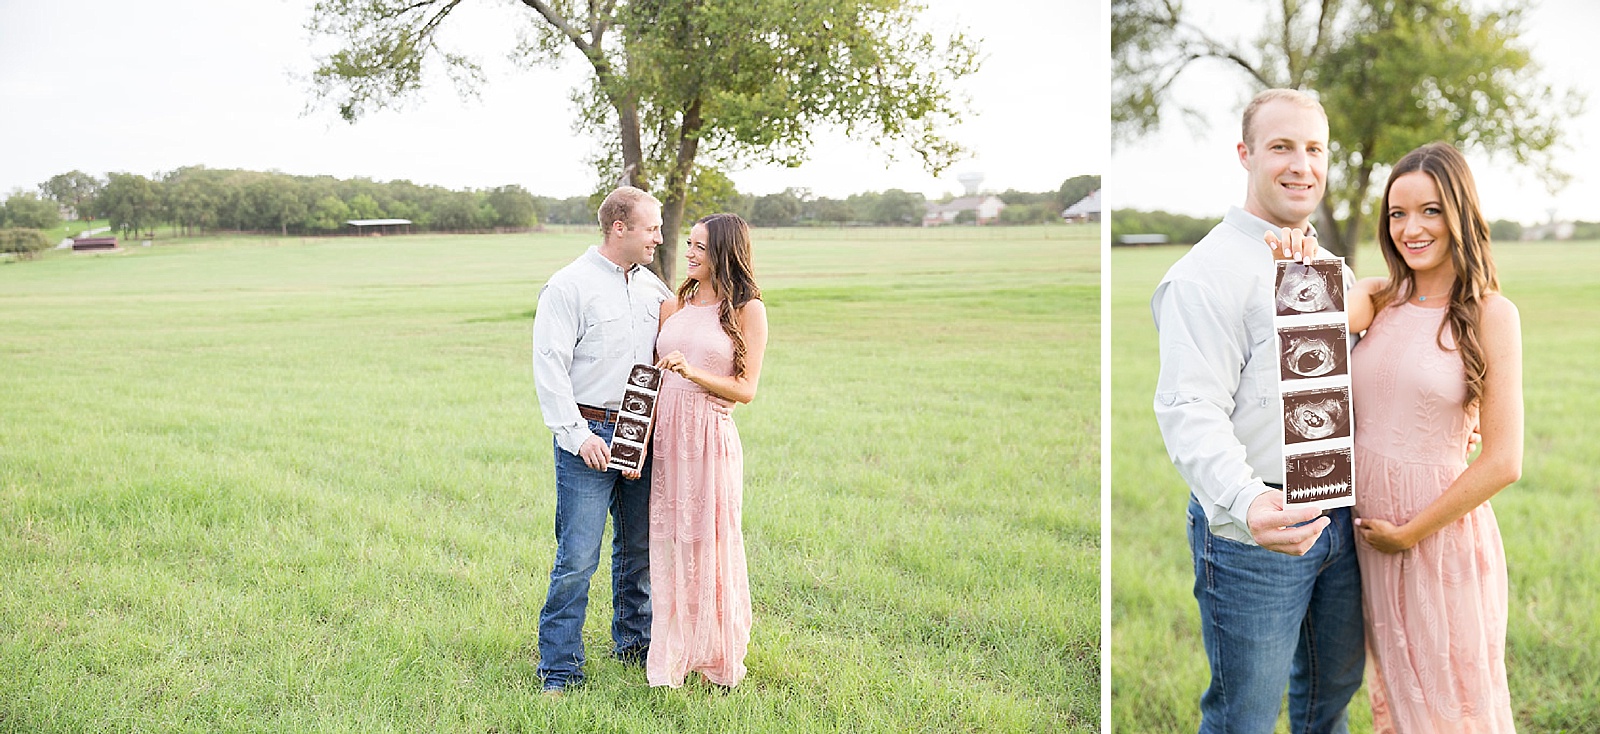 Randi Michelle Photography helps couple announce maternity portraits